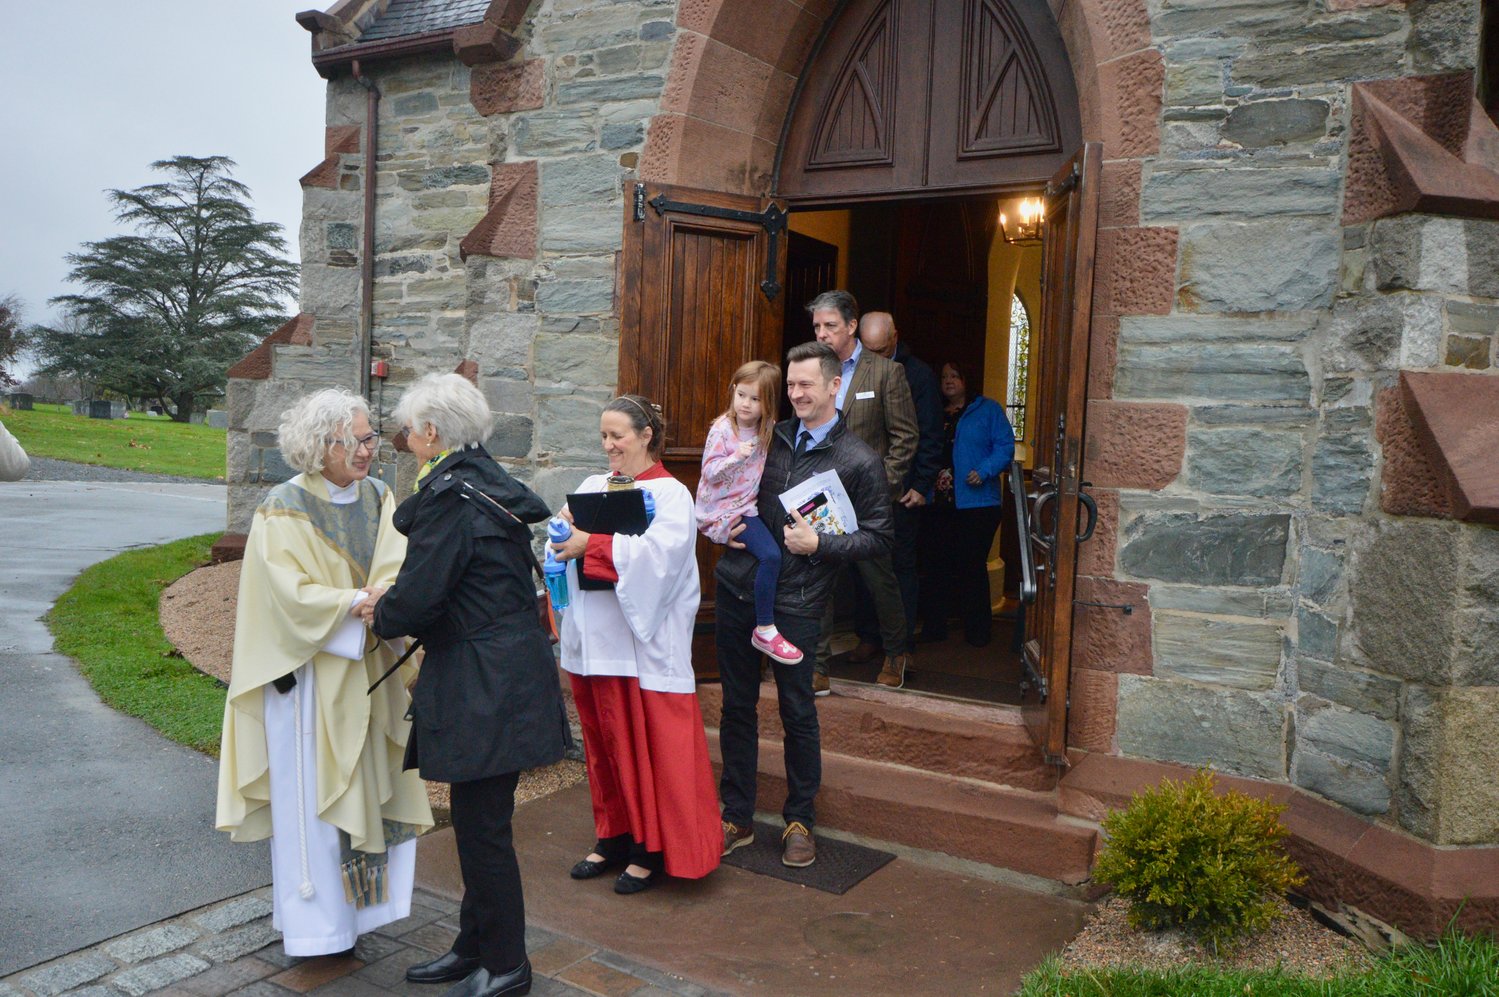 The Rev. Jennifer Pedrick greets parishioners outside the church immediately following the service.